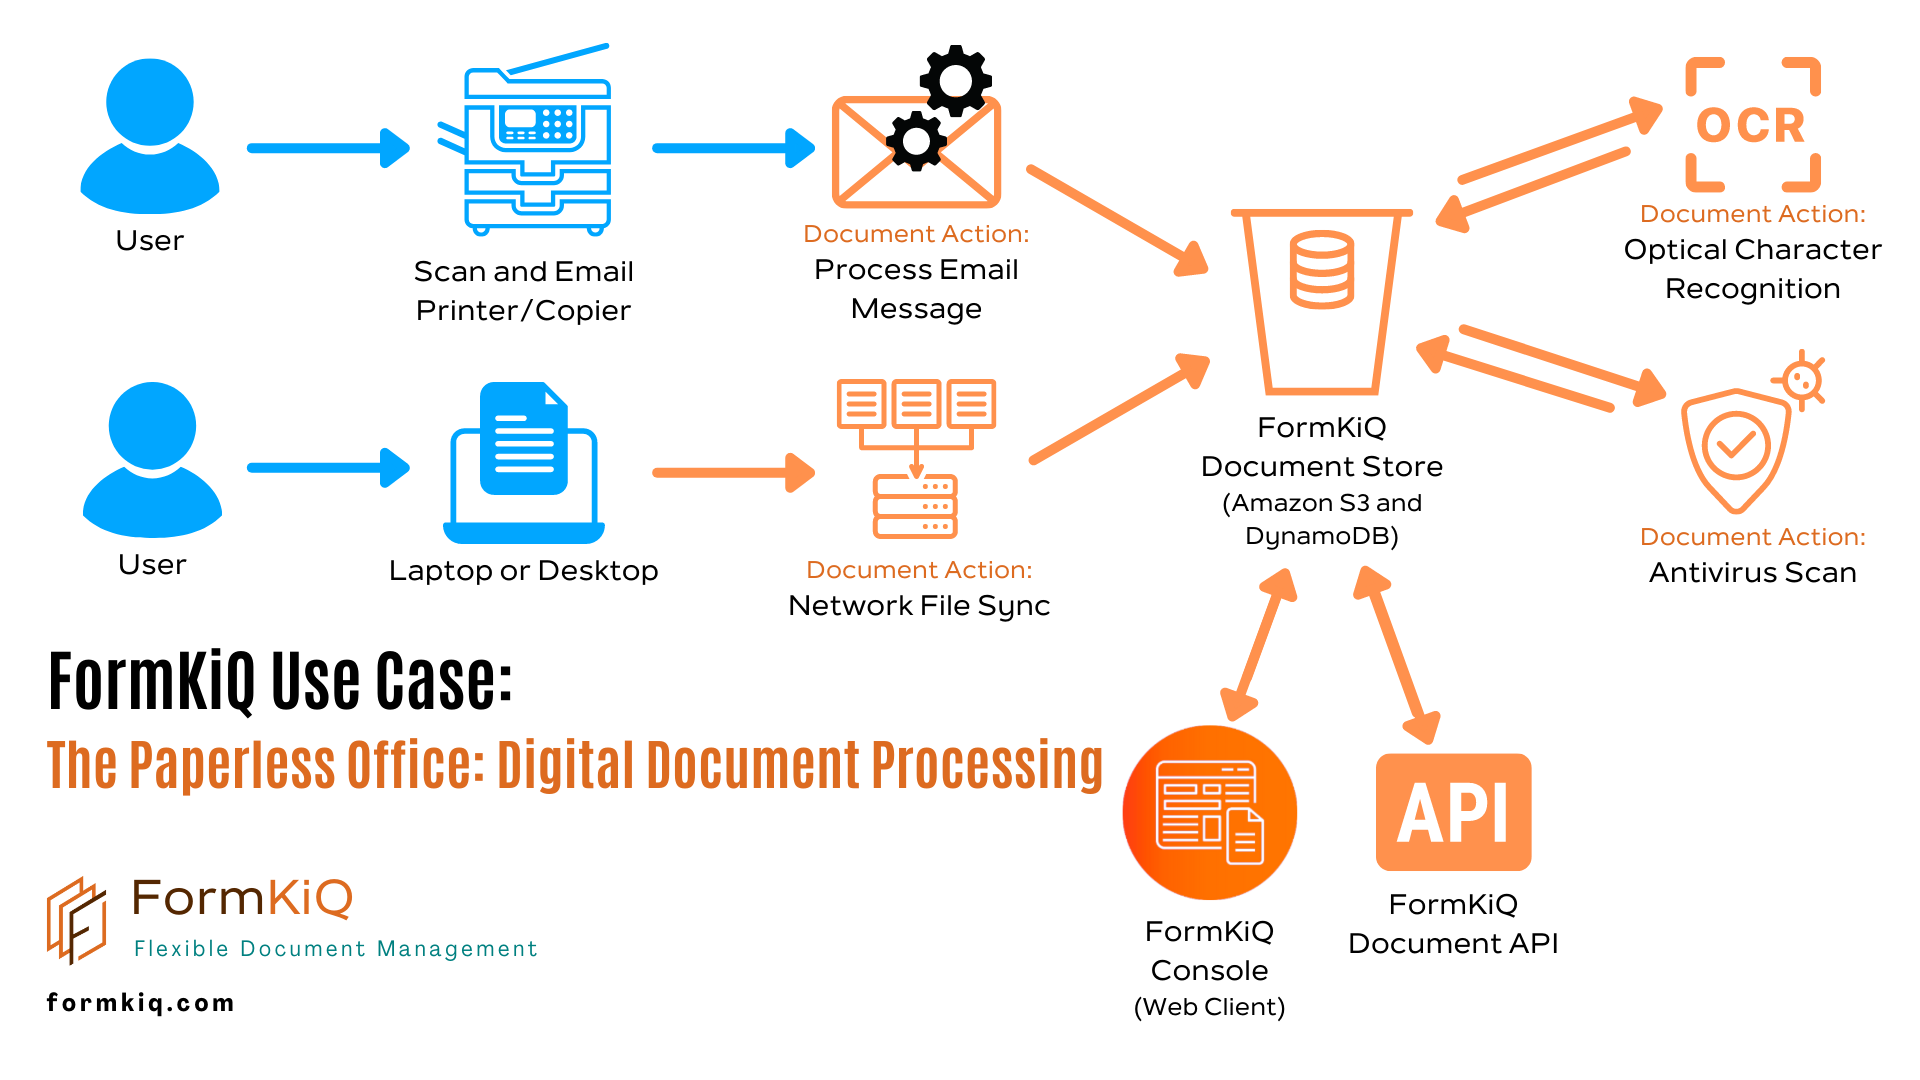 FormKiQ Use Case: Digital Document Processing Service